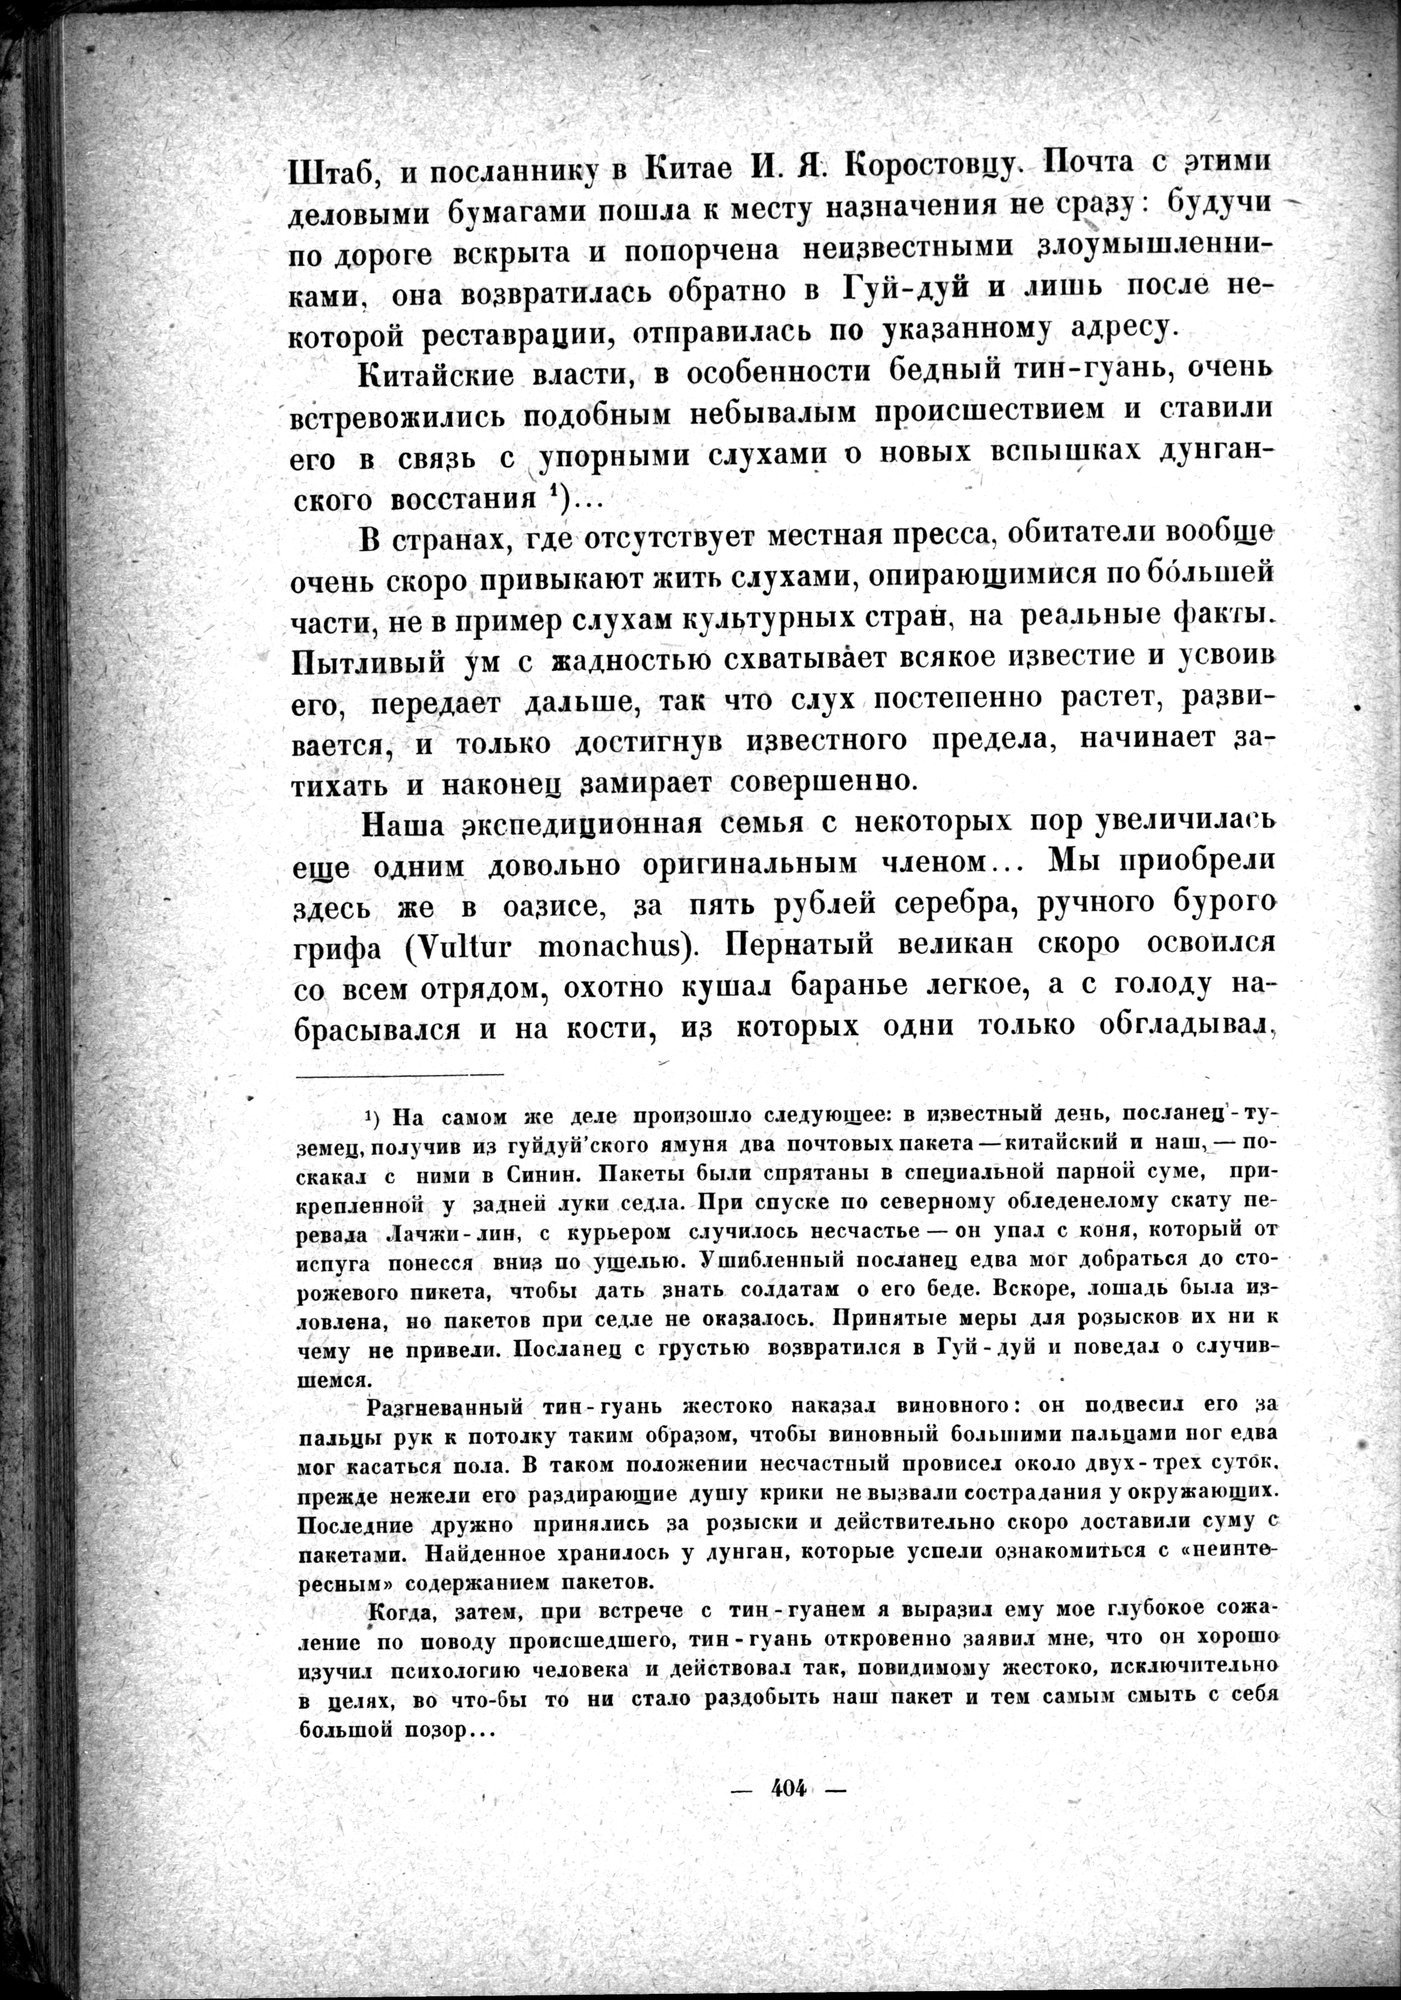 Mongoliya i Amdo i mertby gorod Khara-Khoto : vol.1 / Page 462 (Grayscale High Resolution Image)